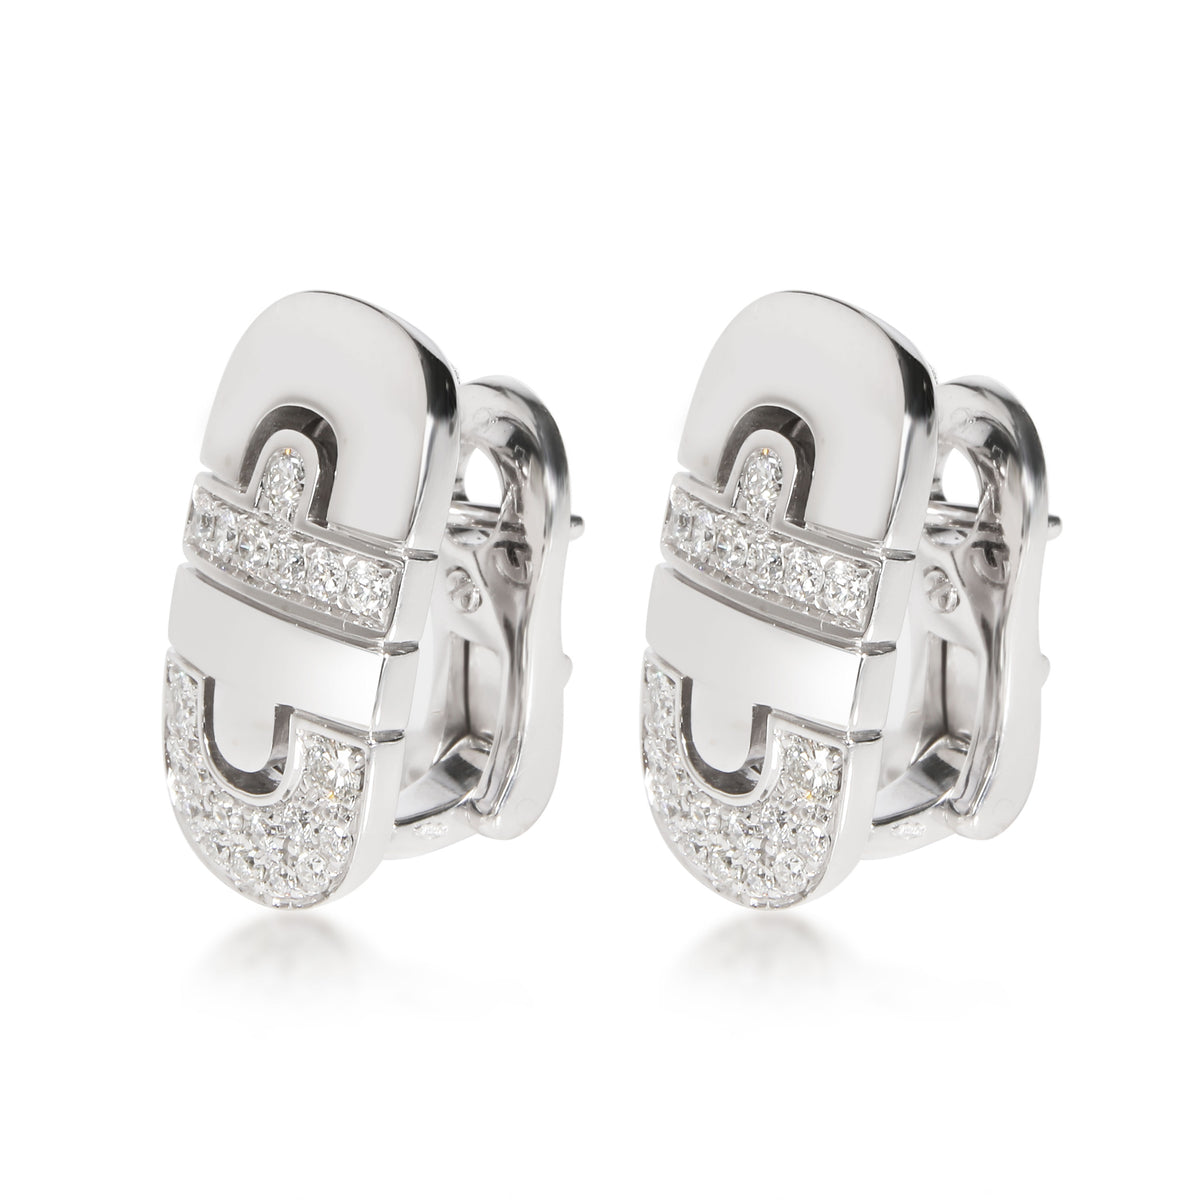 Bulgari Parentesi Diamond Earrings in 18K White Gold 0.75 CTW